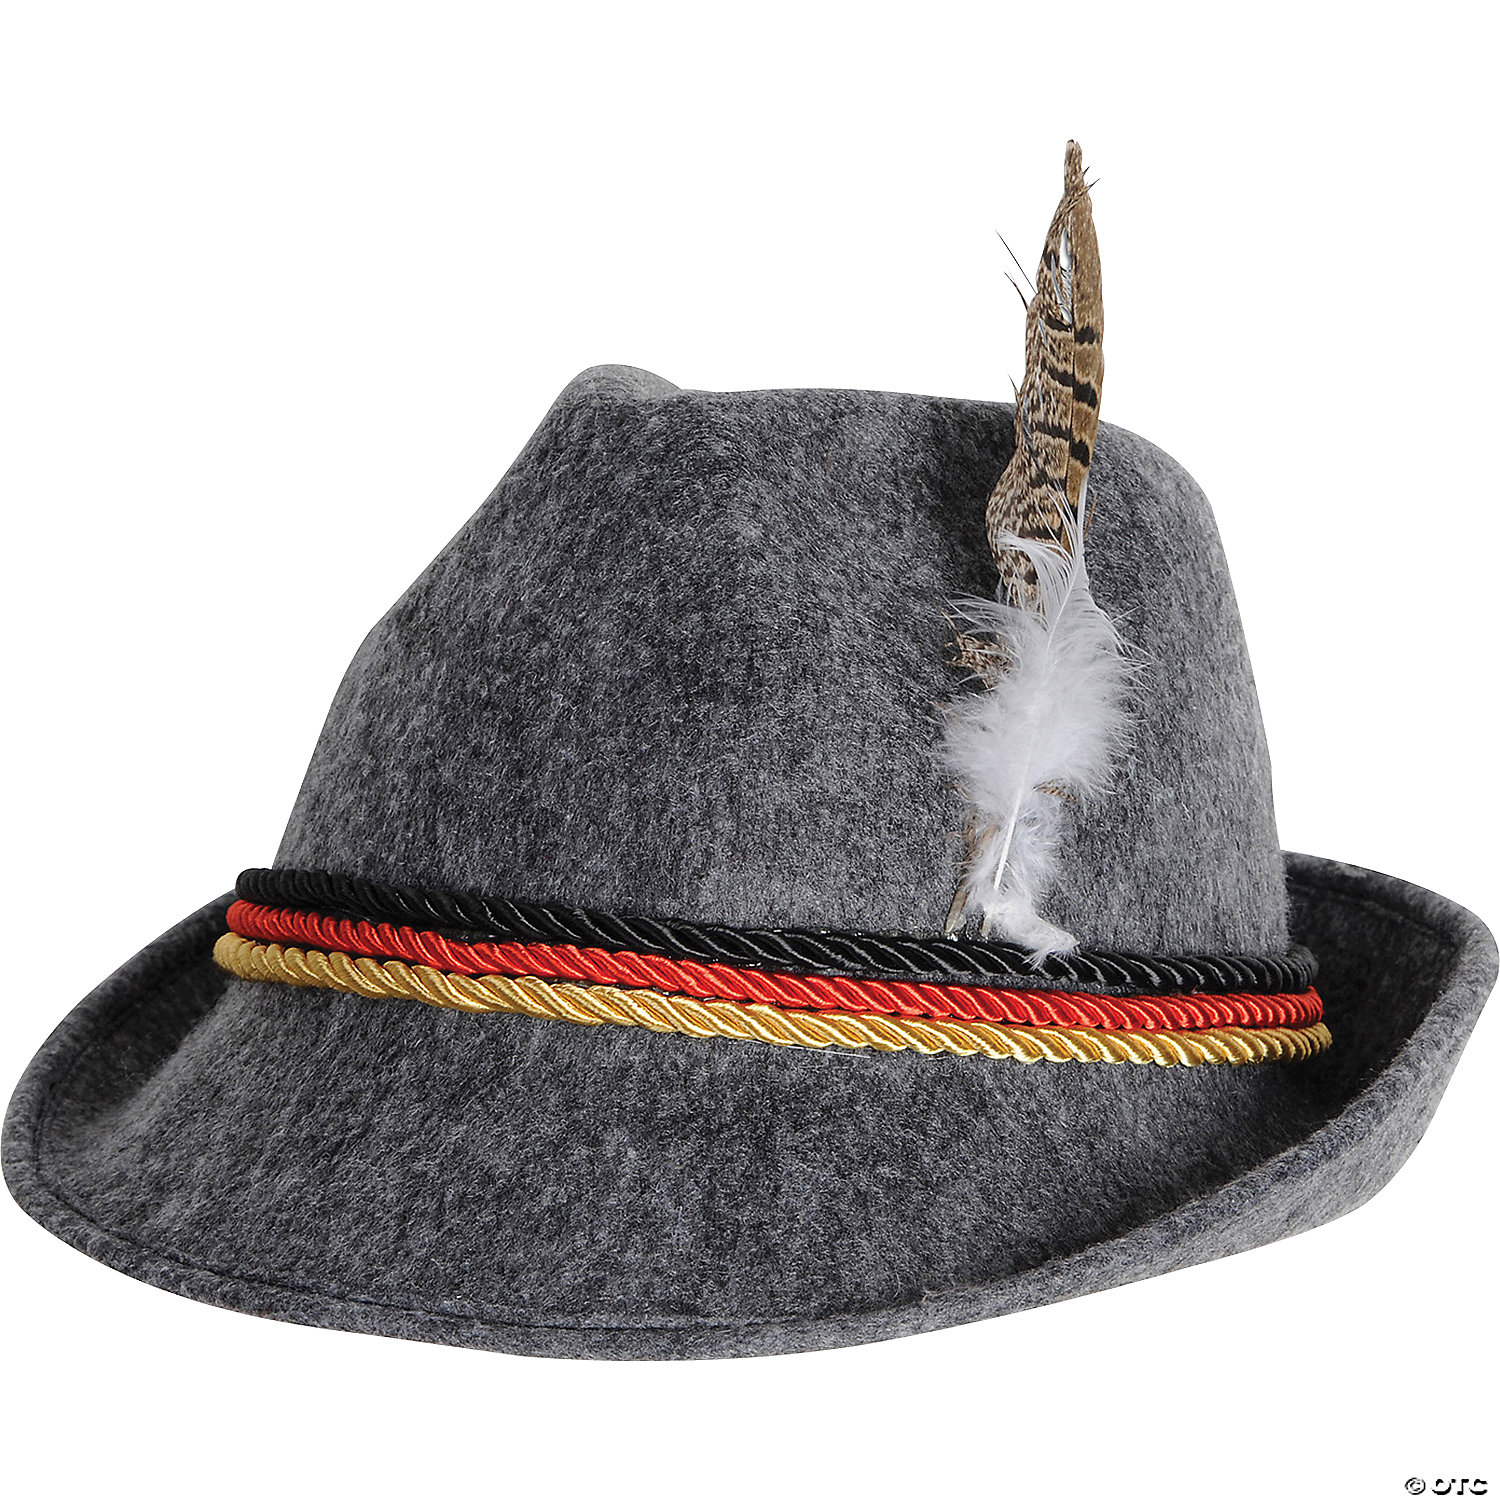 GERMAN ALPINE HAT - OKTOBERFEST